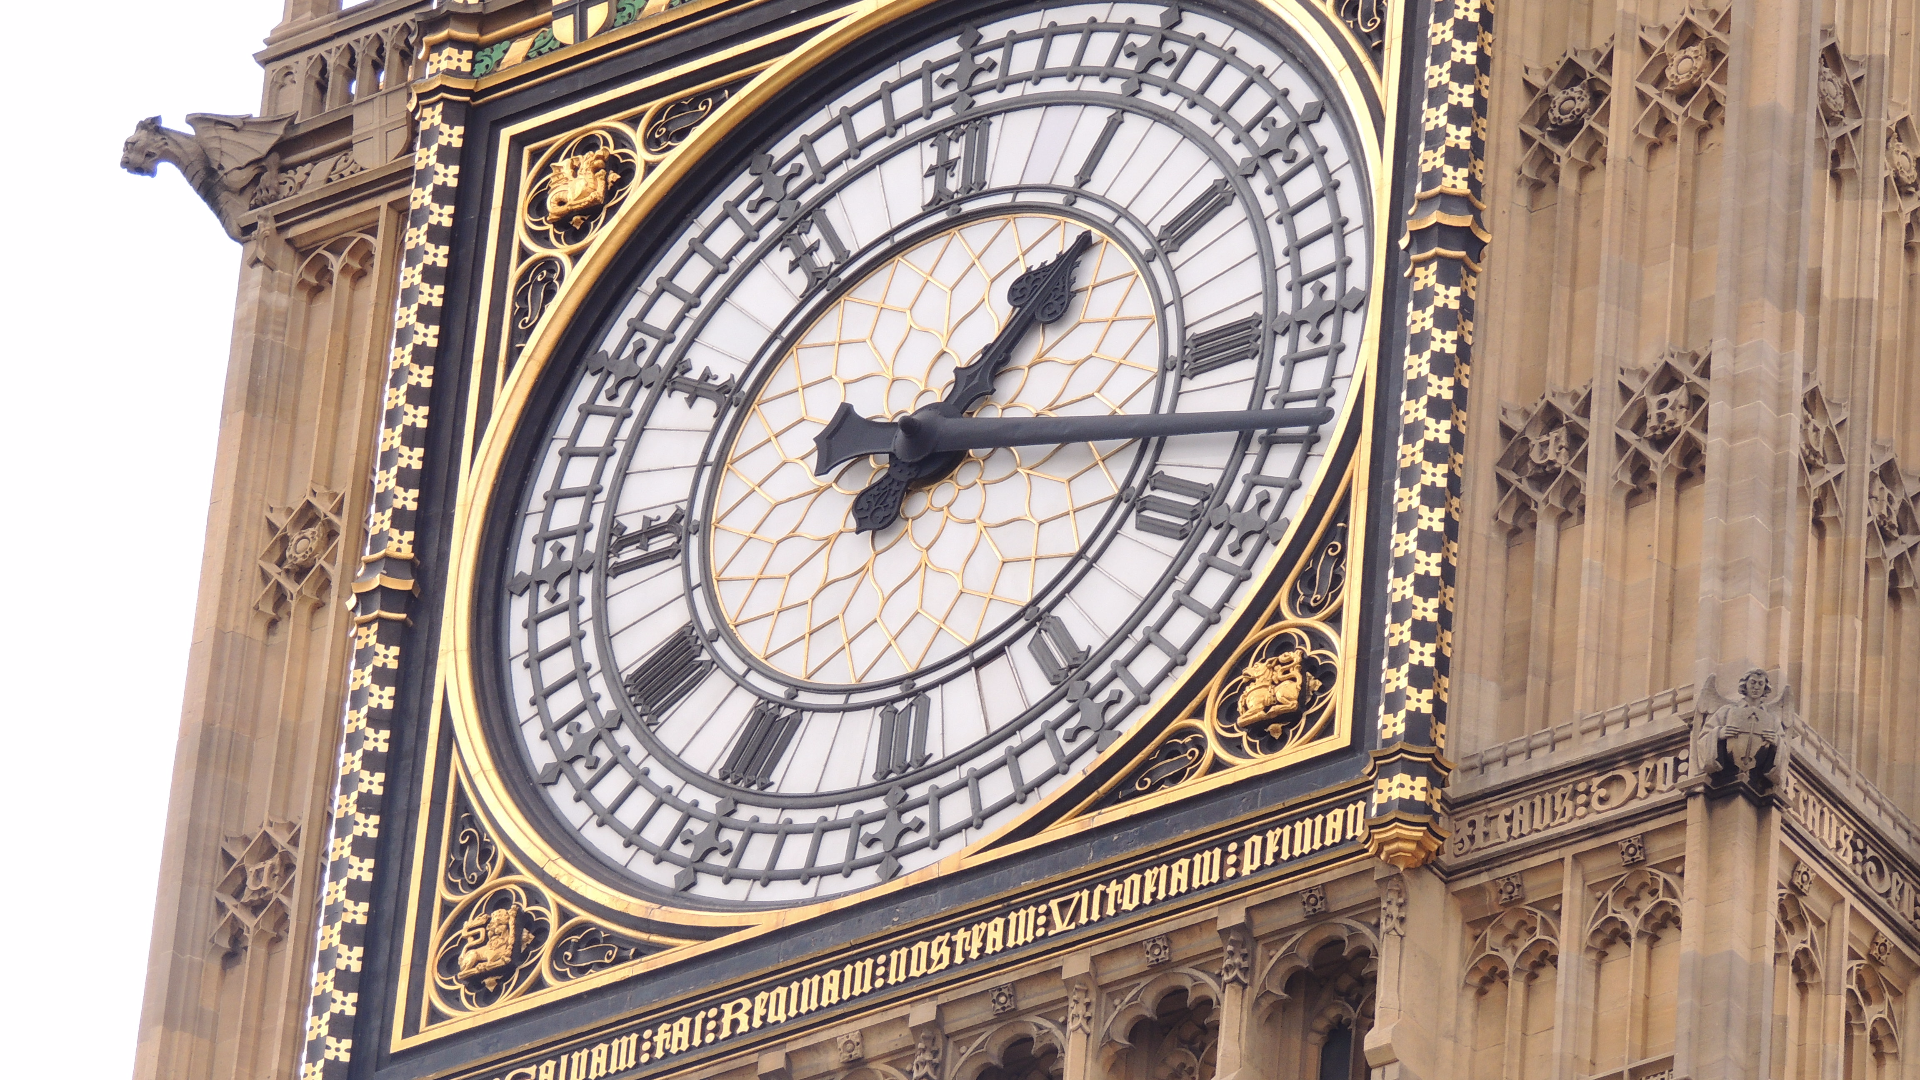 General 1920x1080 Big Ben England clocks building London UK landmark Europe